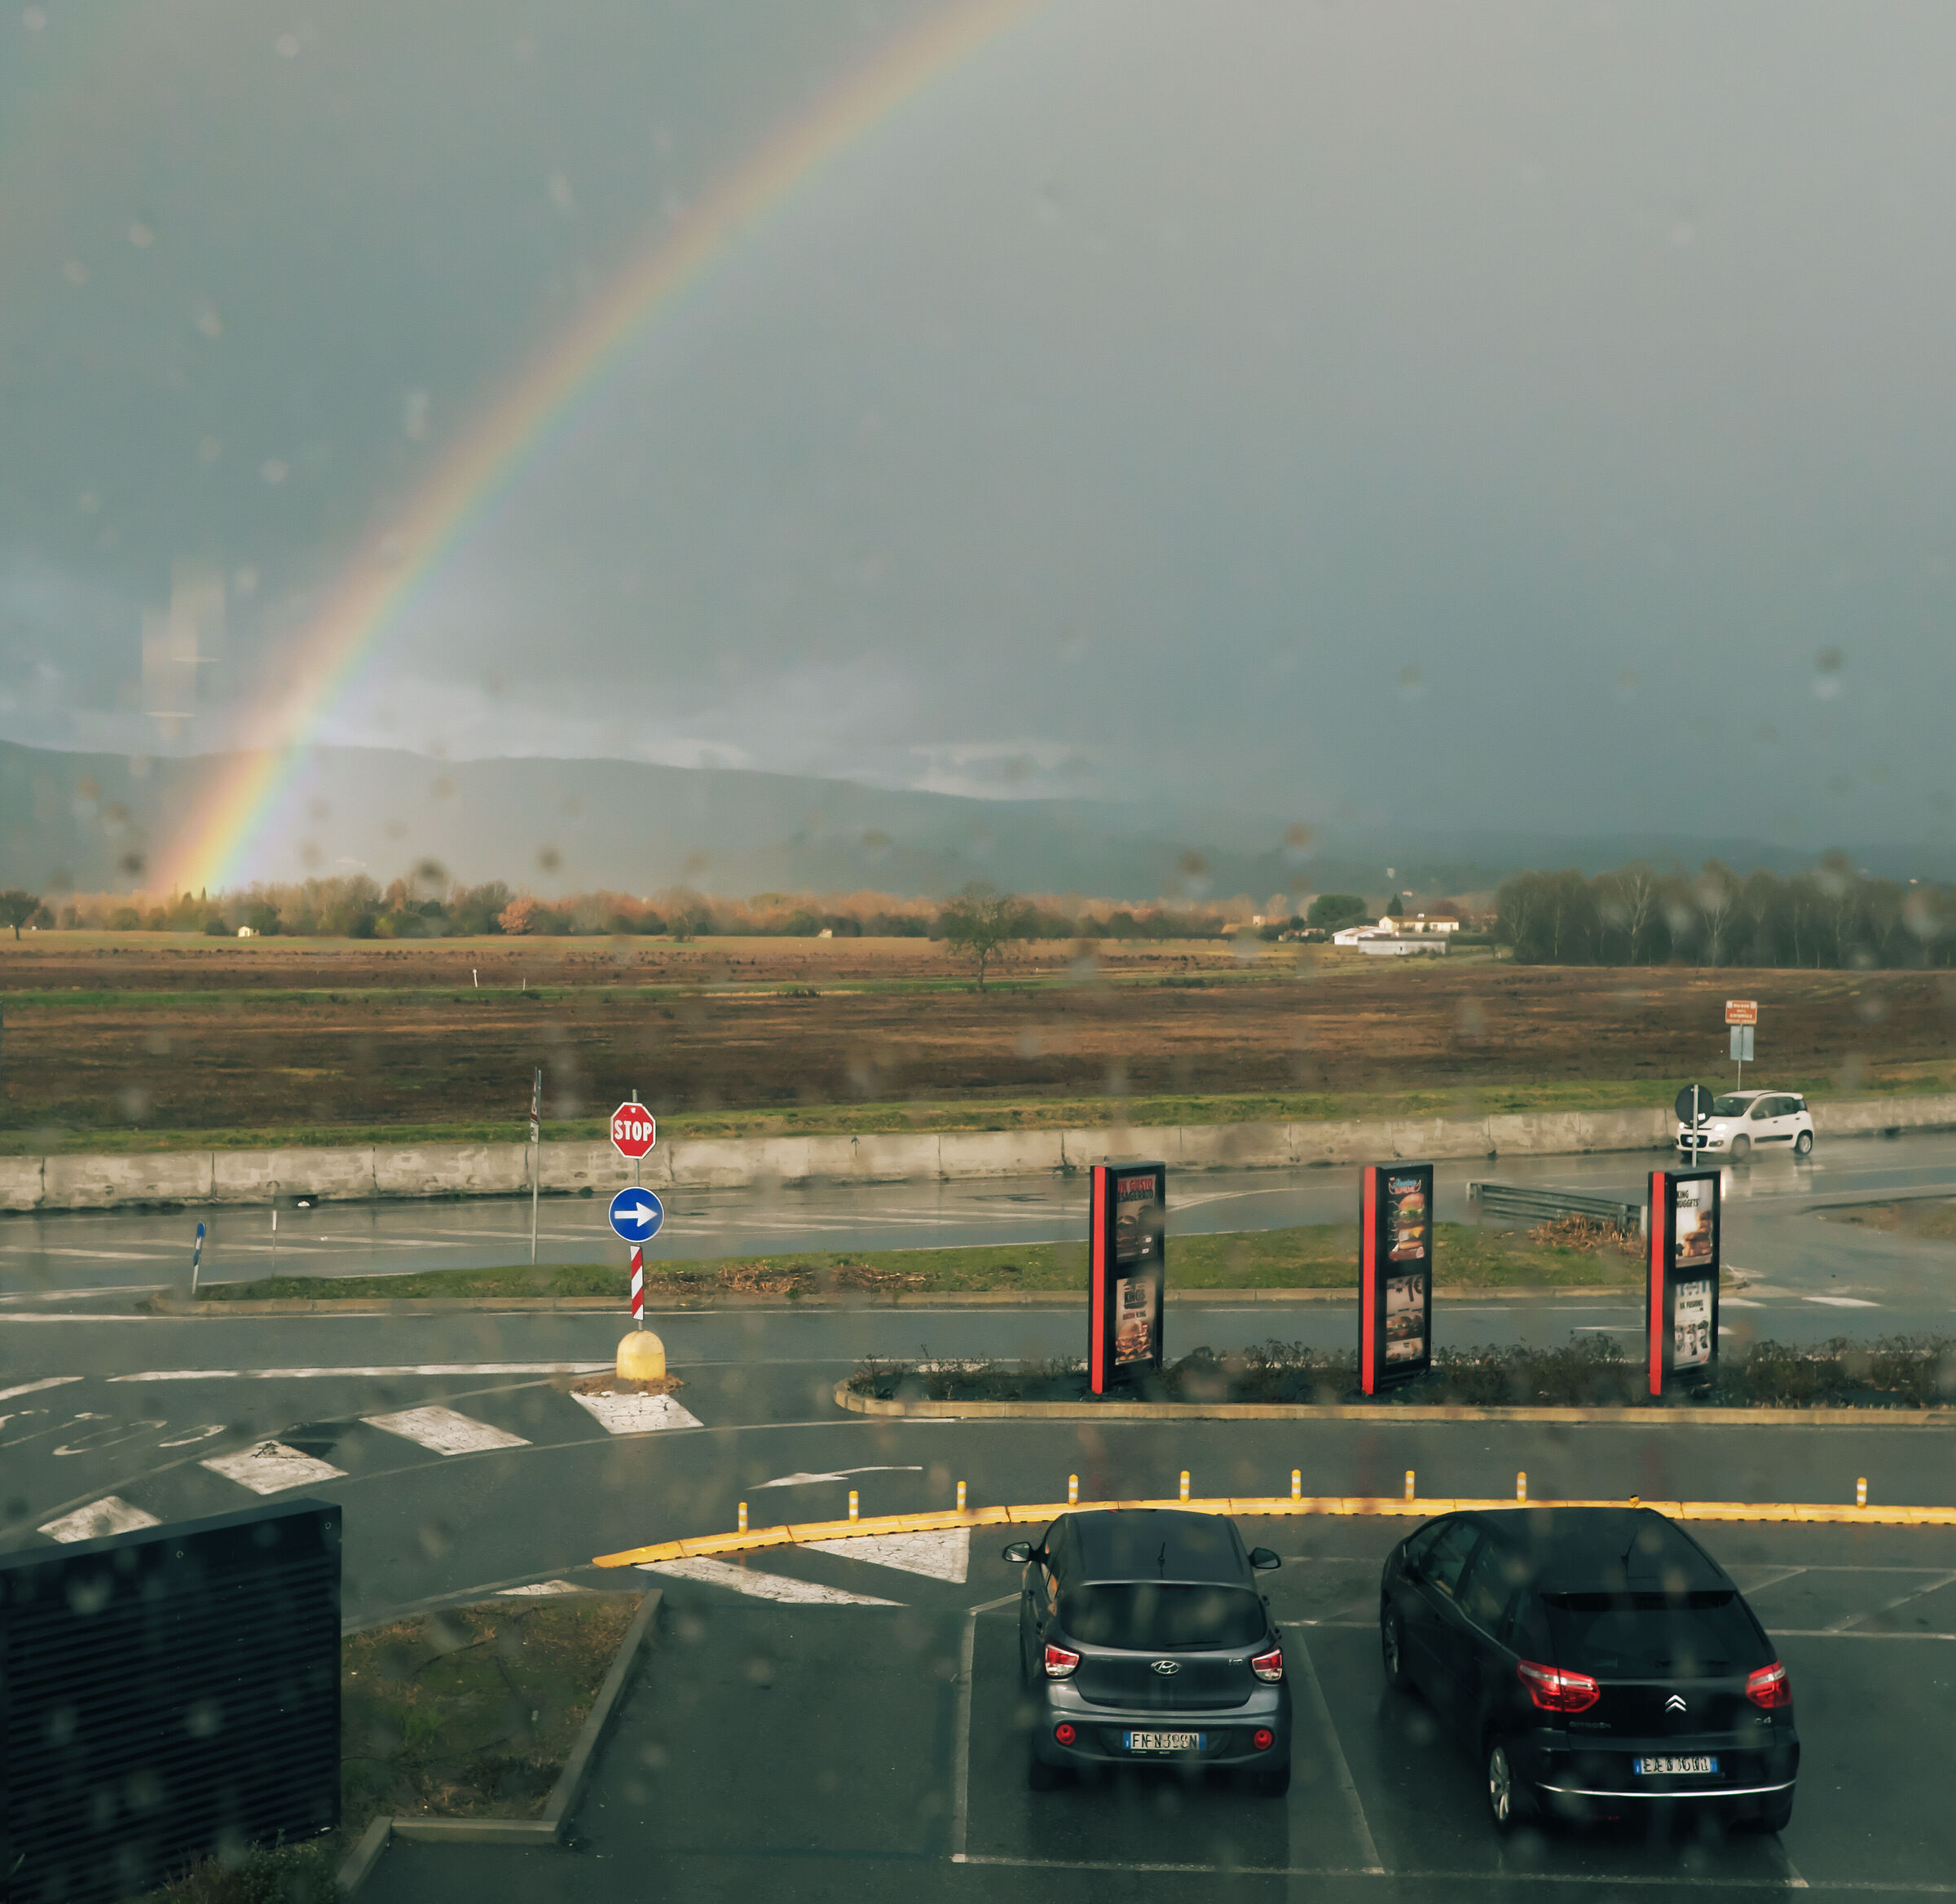 The rainbow on the periphery...